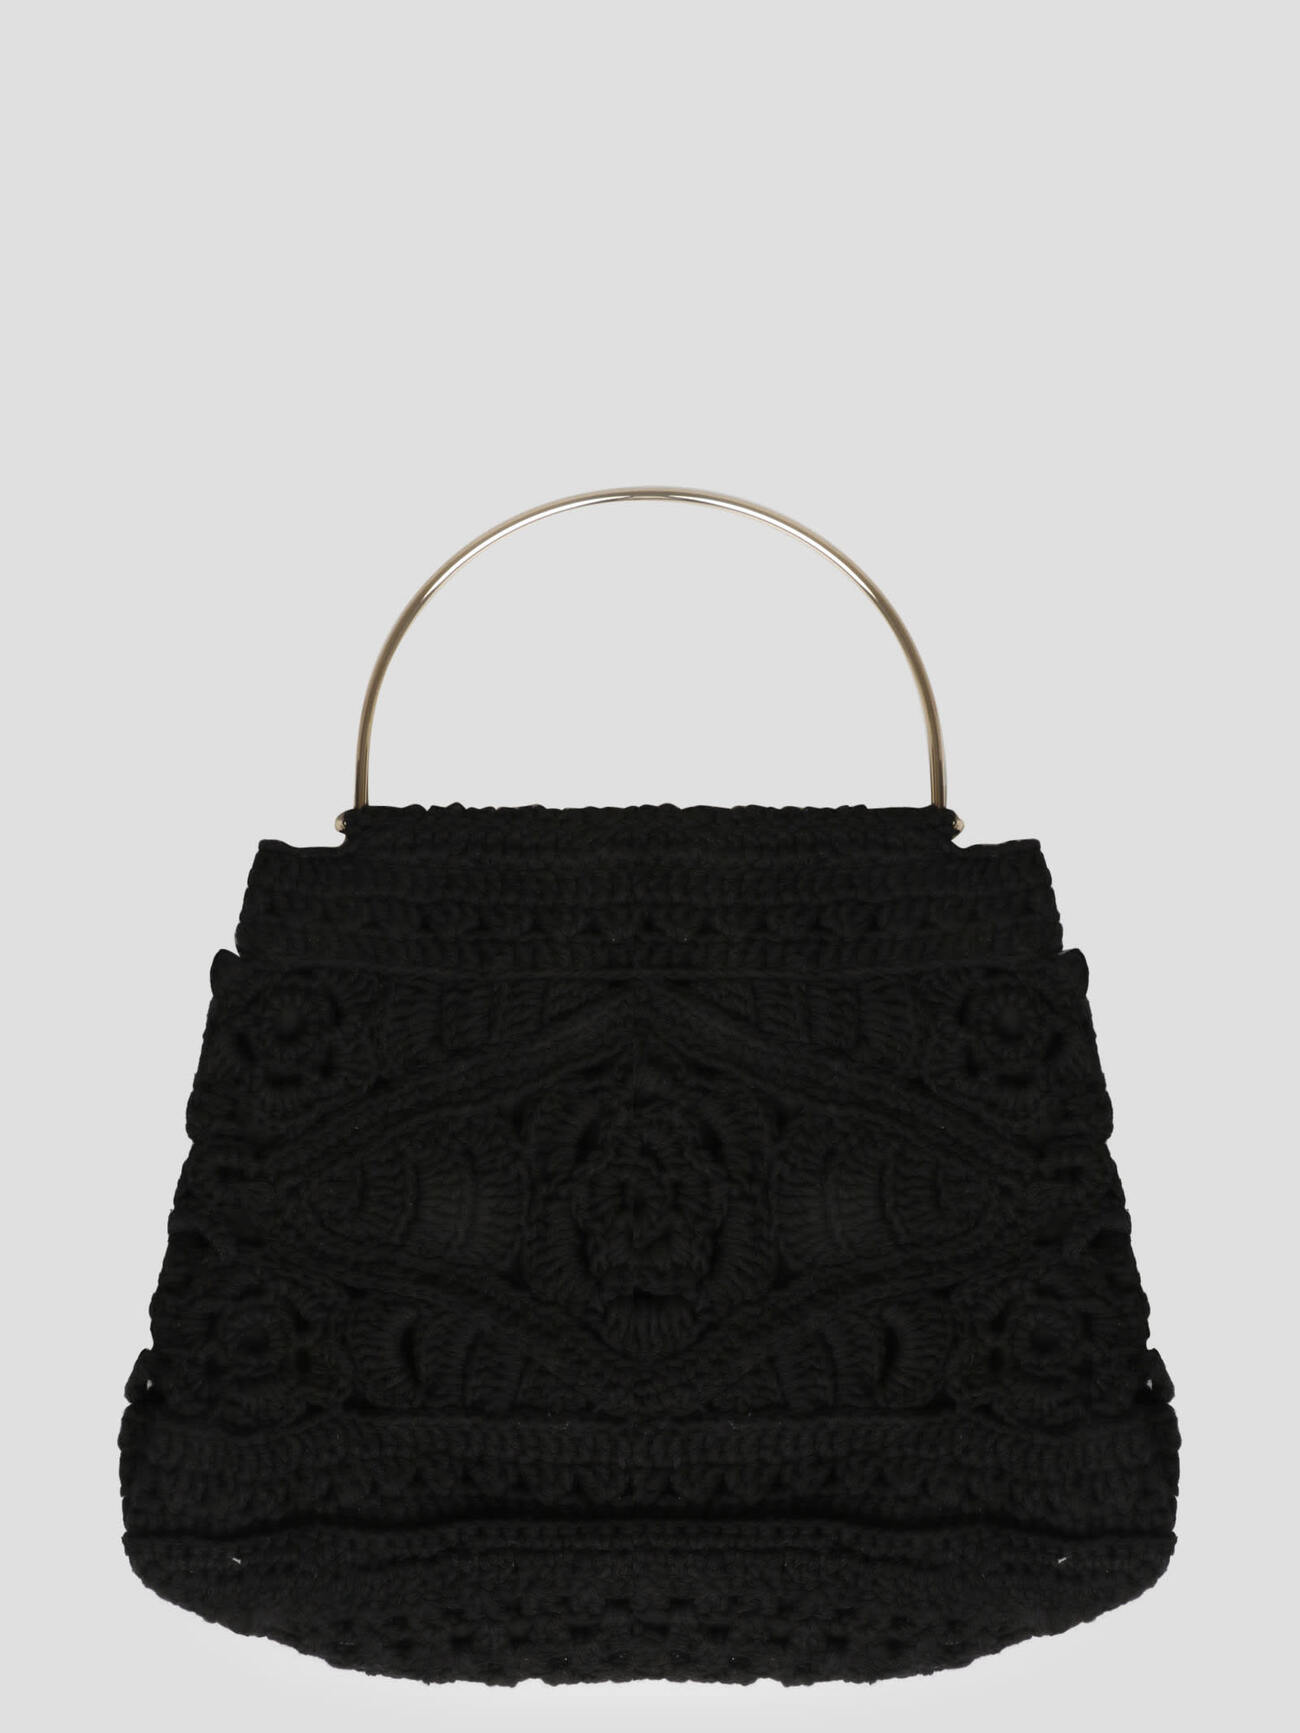 Ash Camila Handle Bag in black